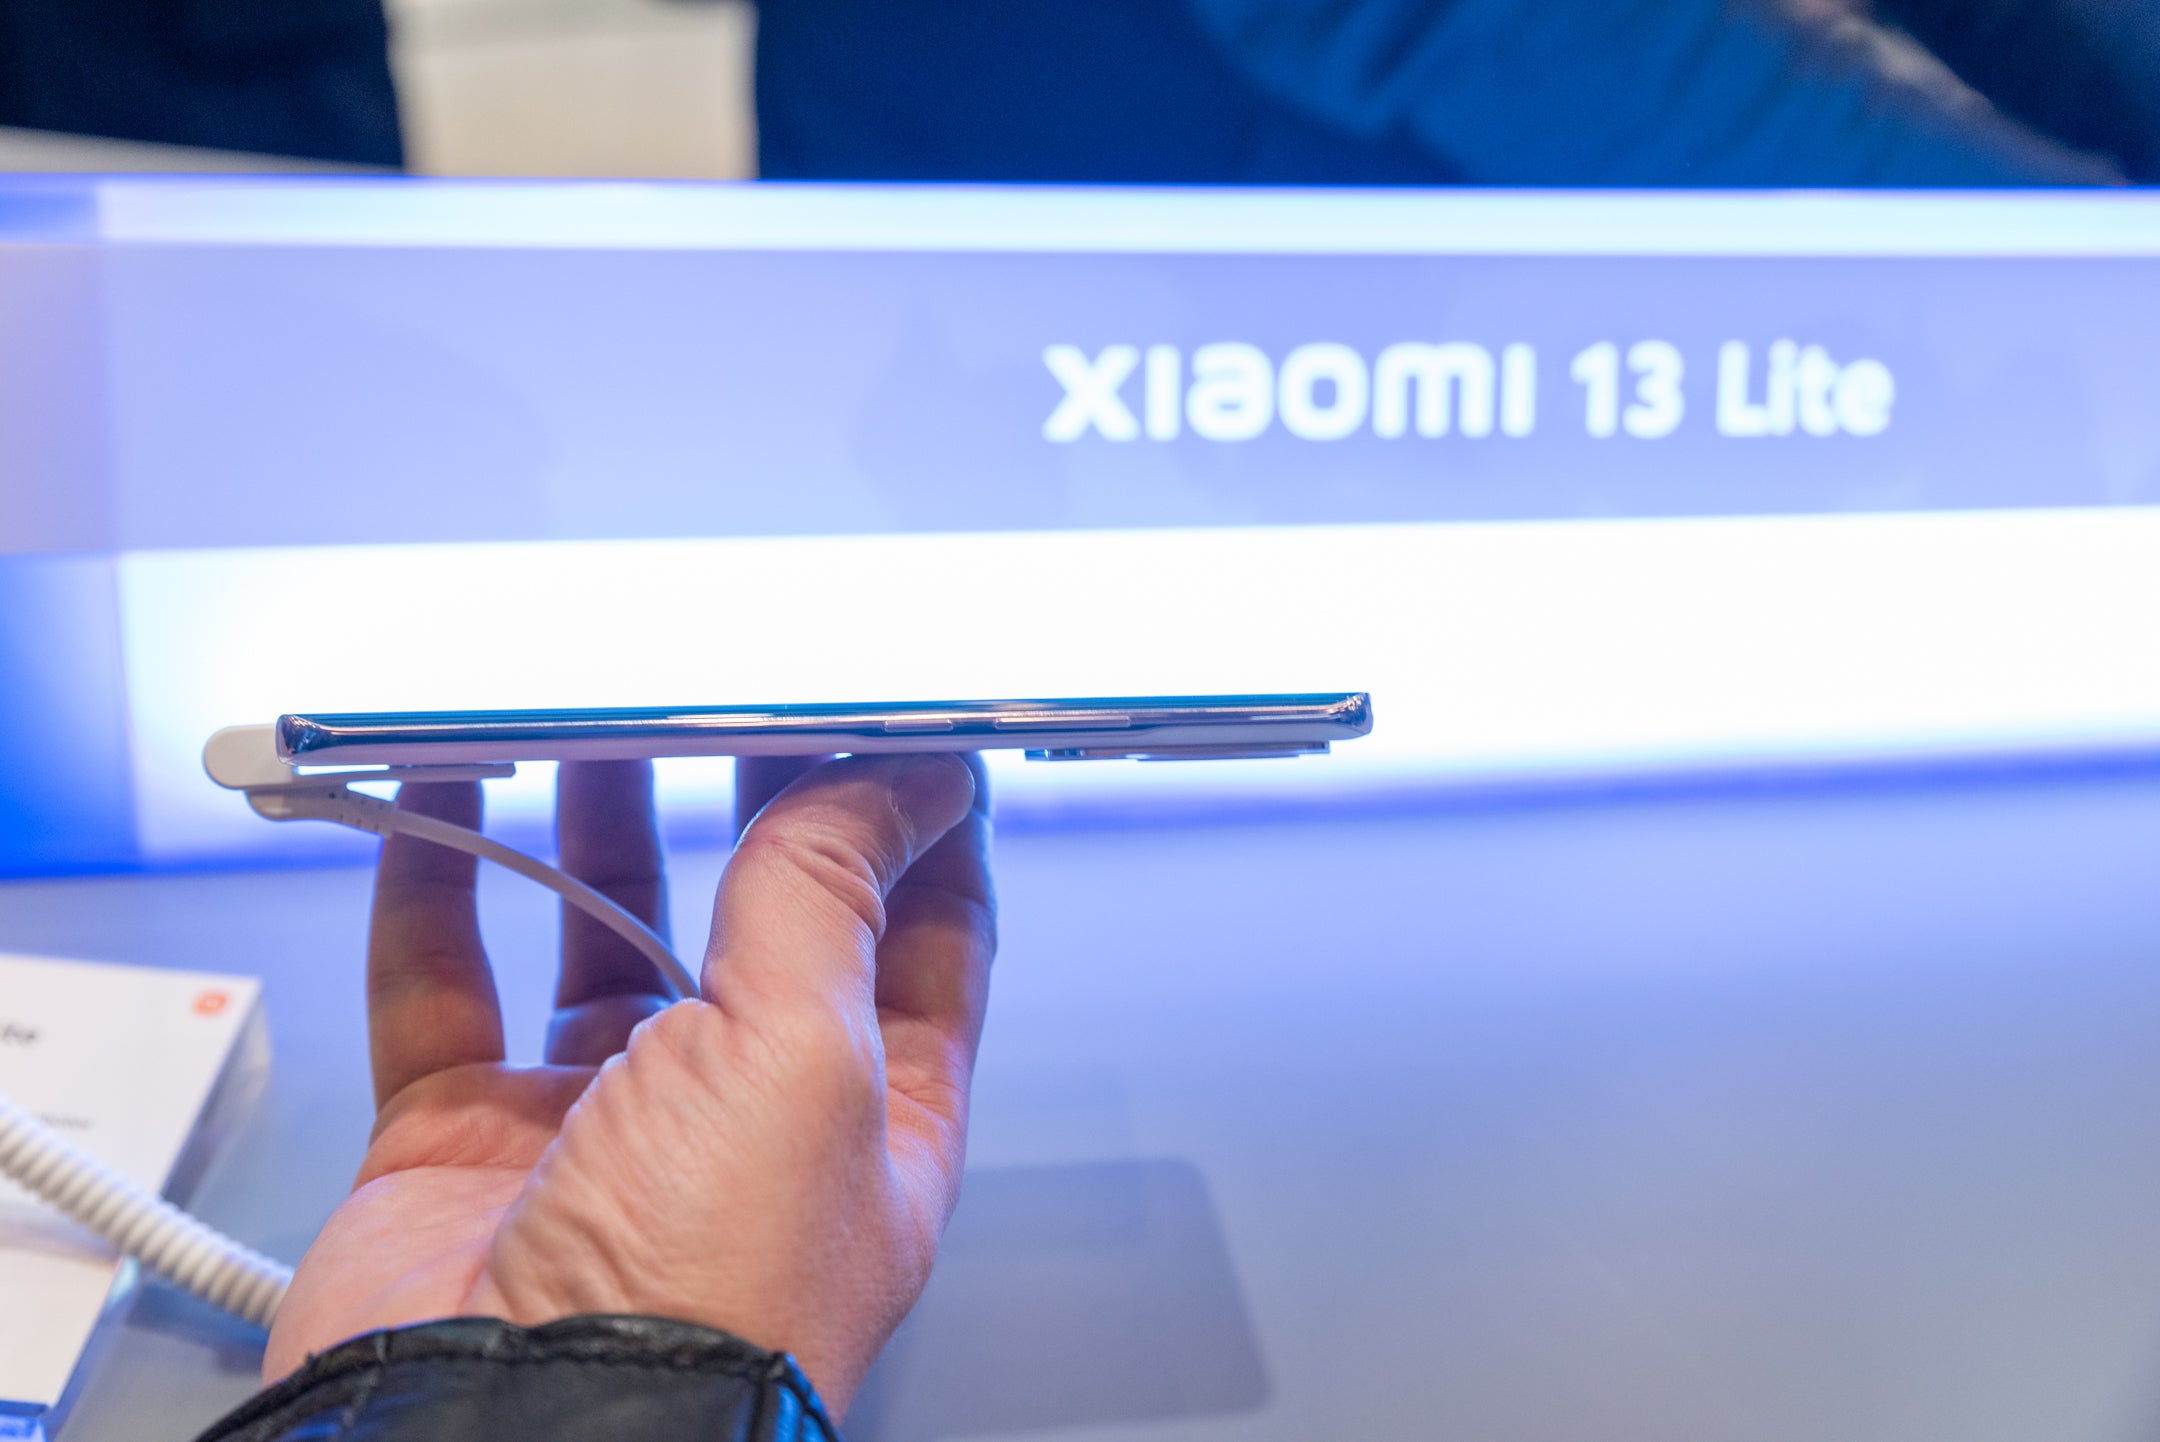 Xiaomi 13 Lite Hands-on: A worthy contender - PhoneArena